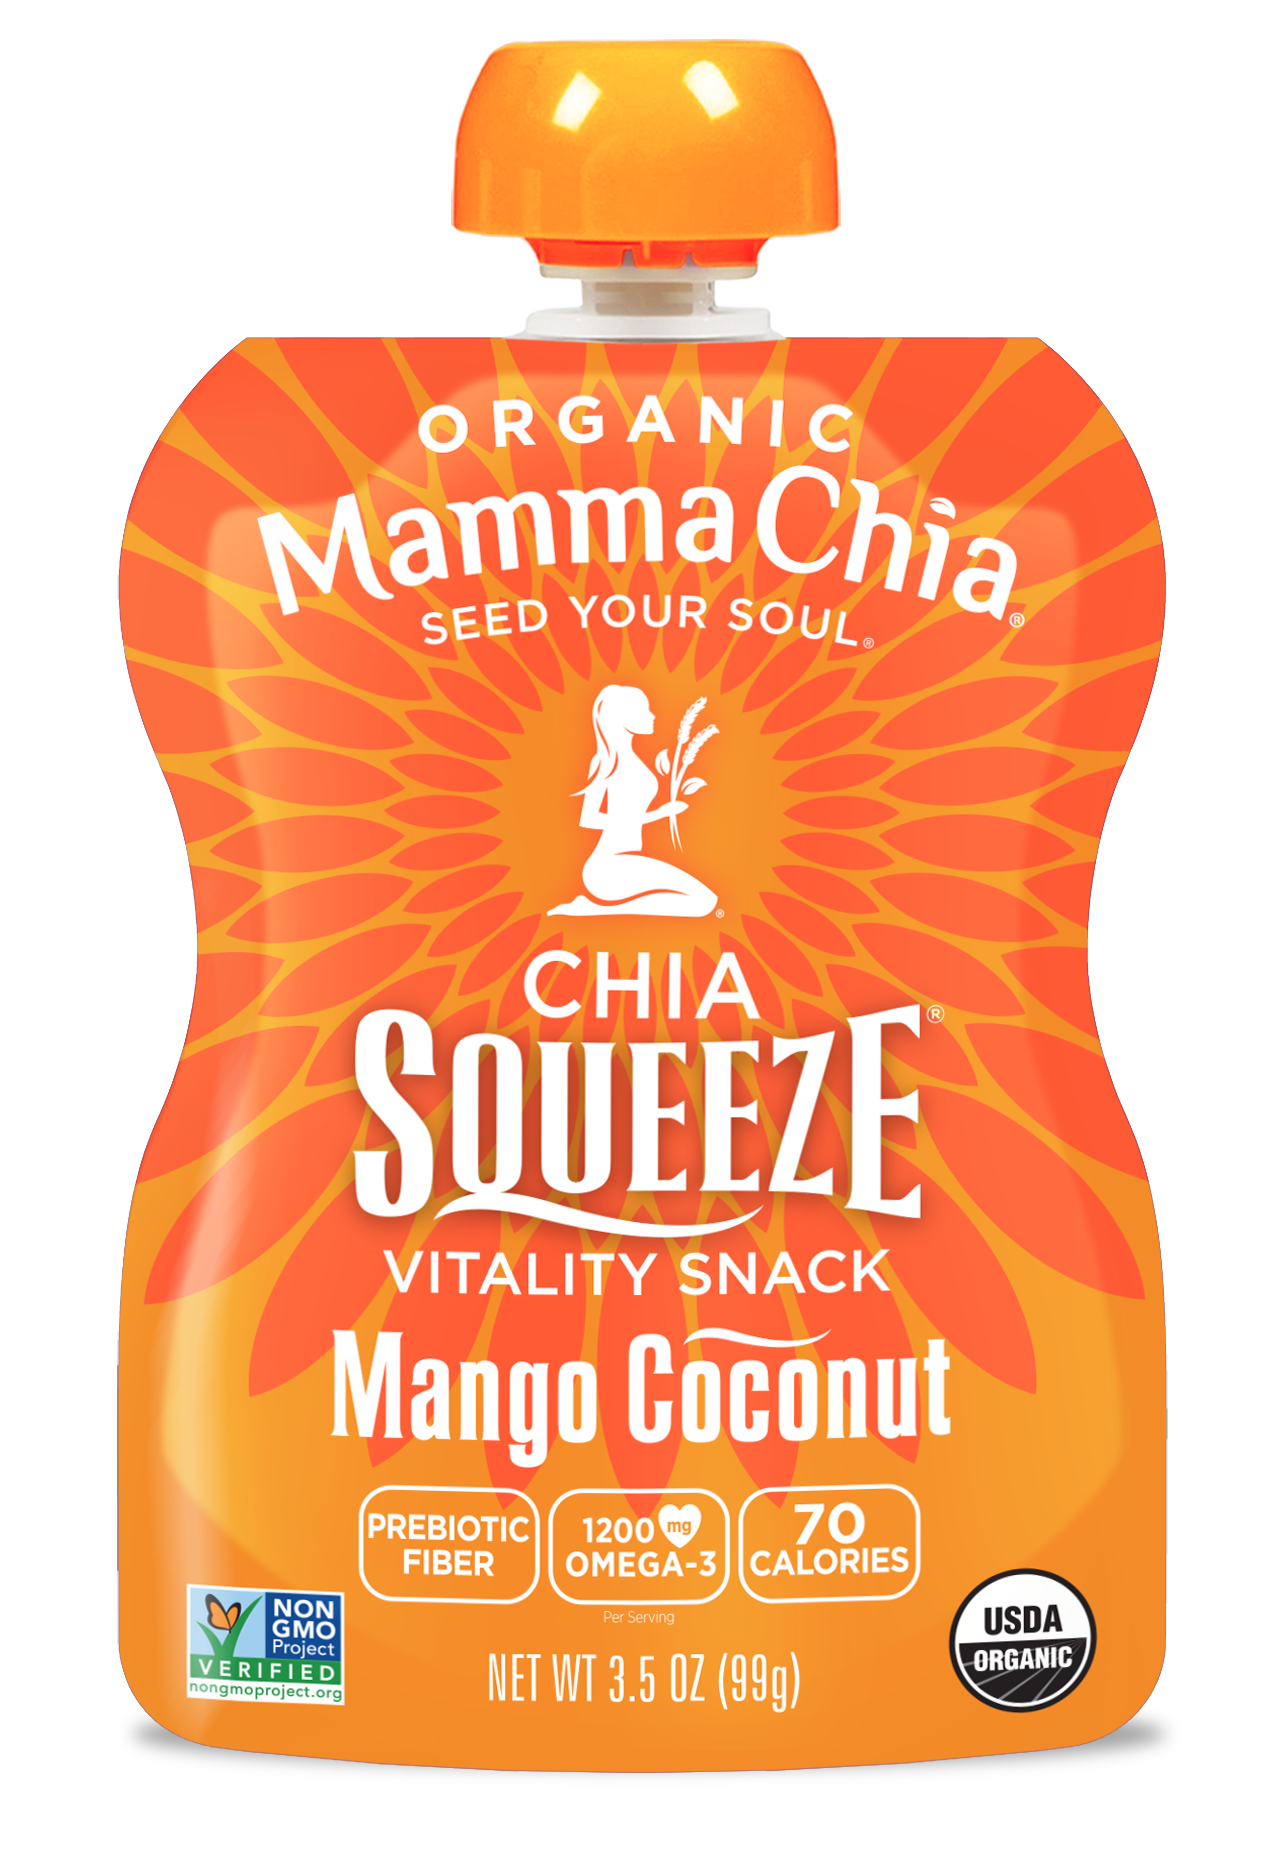 Mamma Chia Mango Coconut Organic Chia Squeeze 2 innerpacks per case 28.0 oz